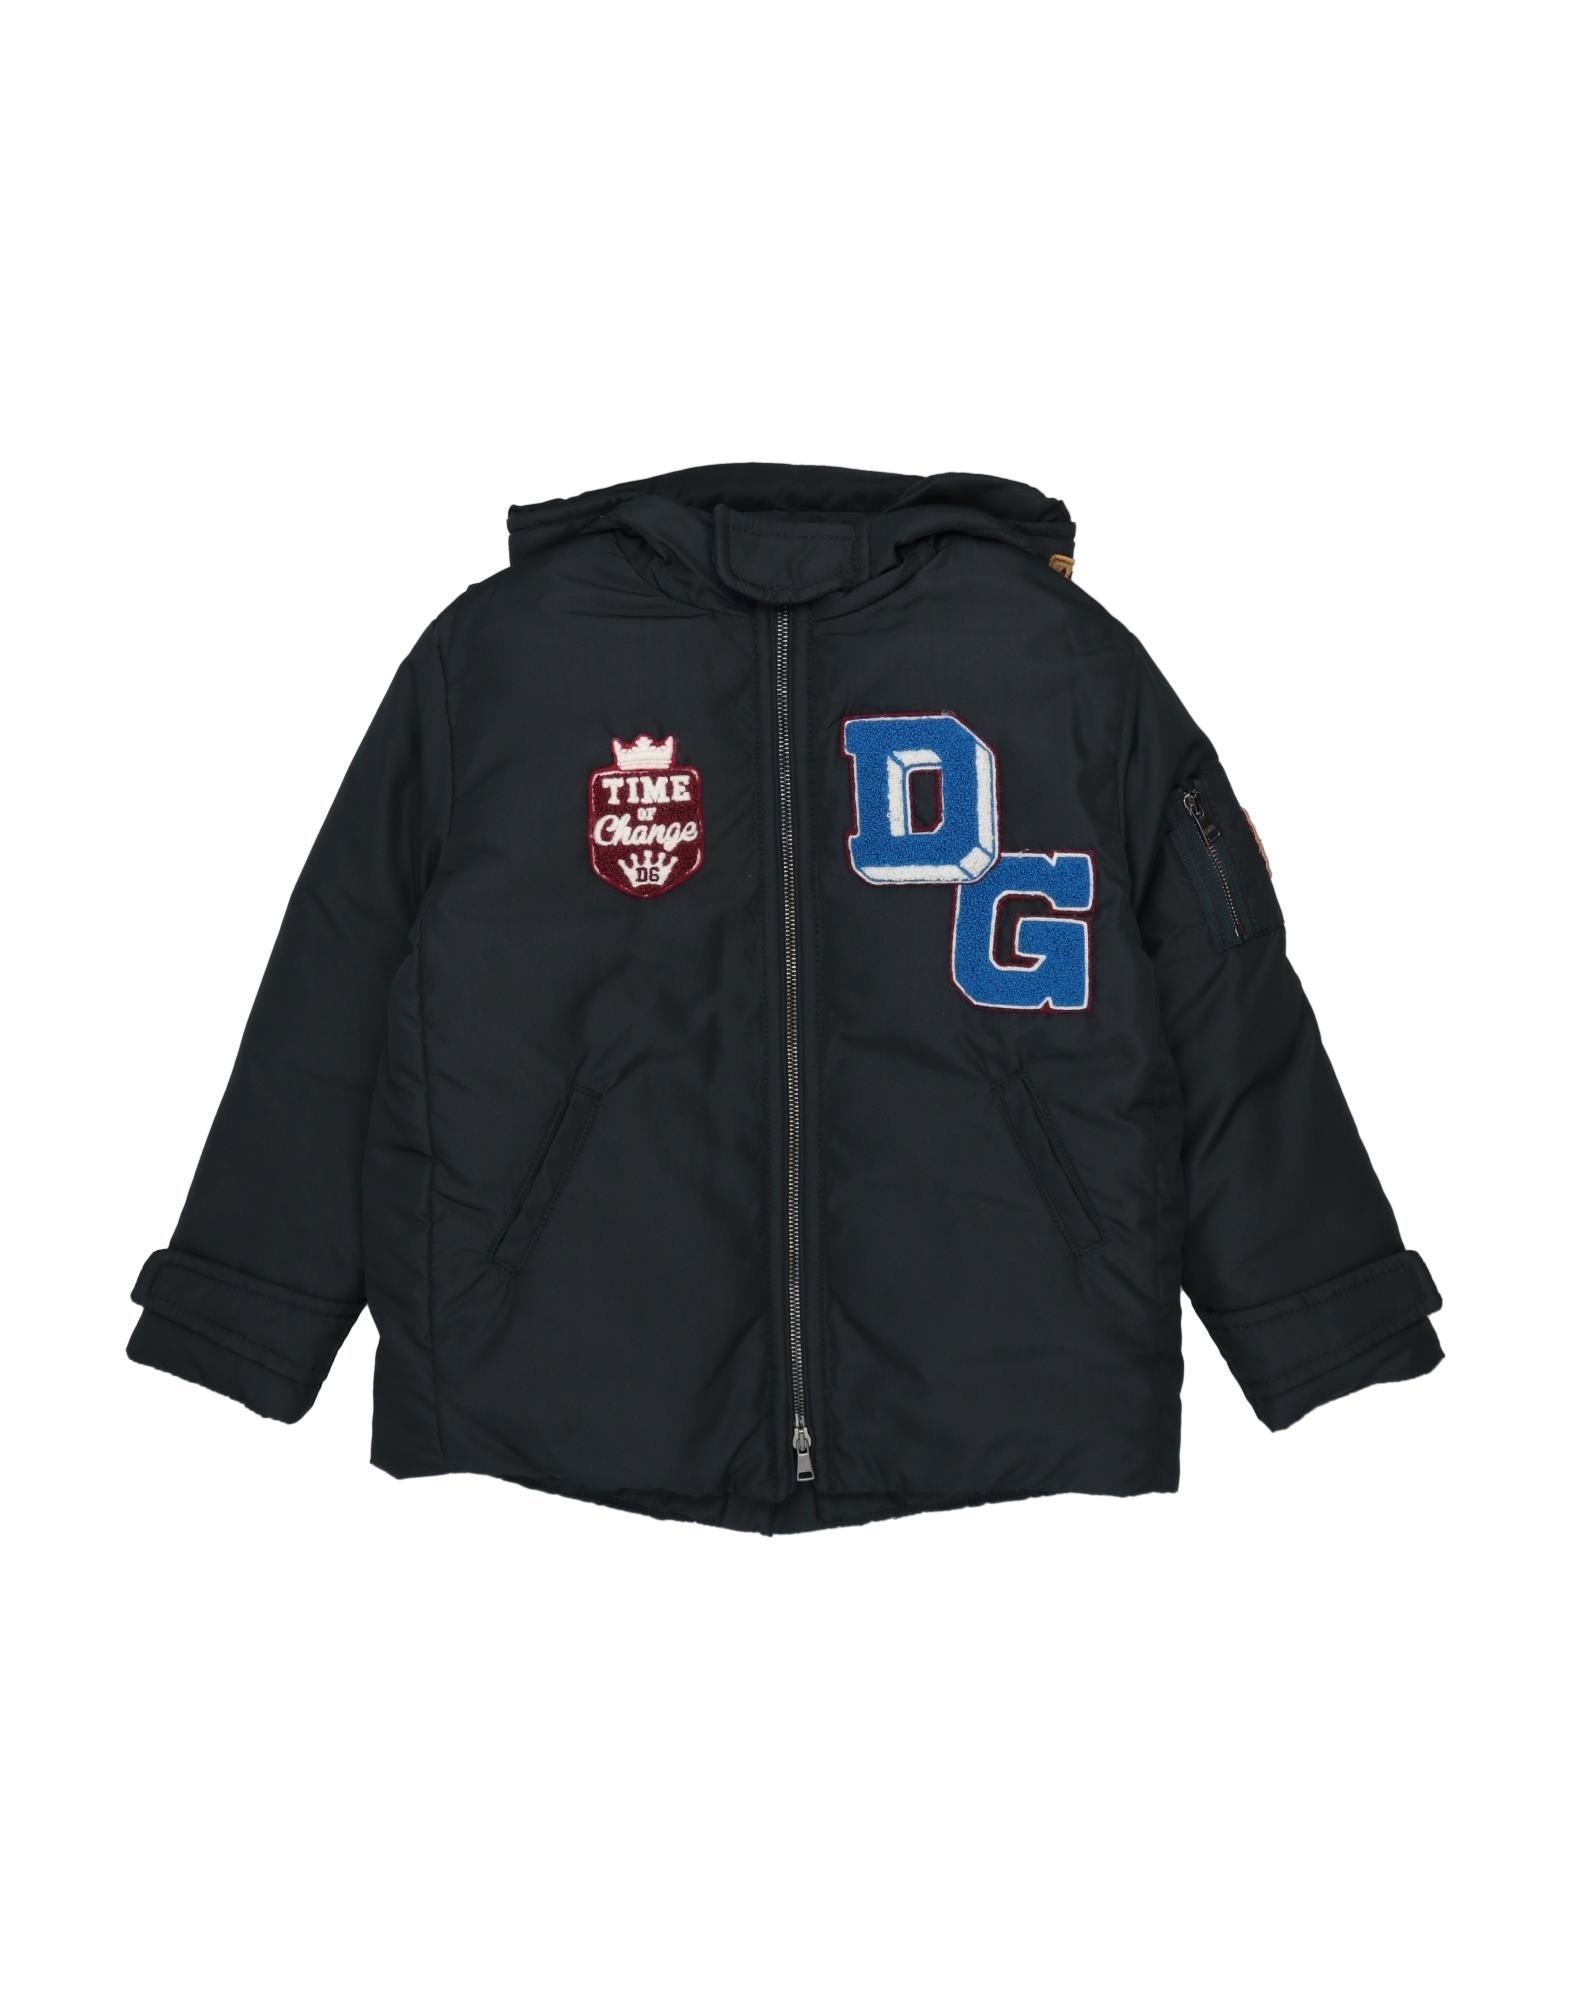 Dolce & Gabbana Kids' Down Jackets In Blue